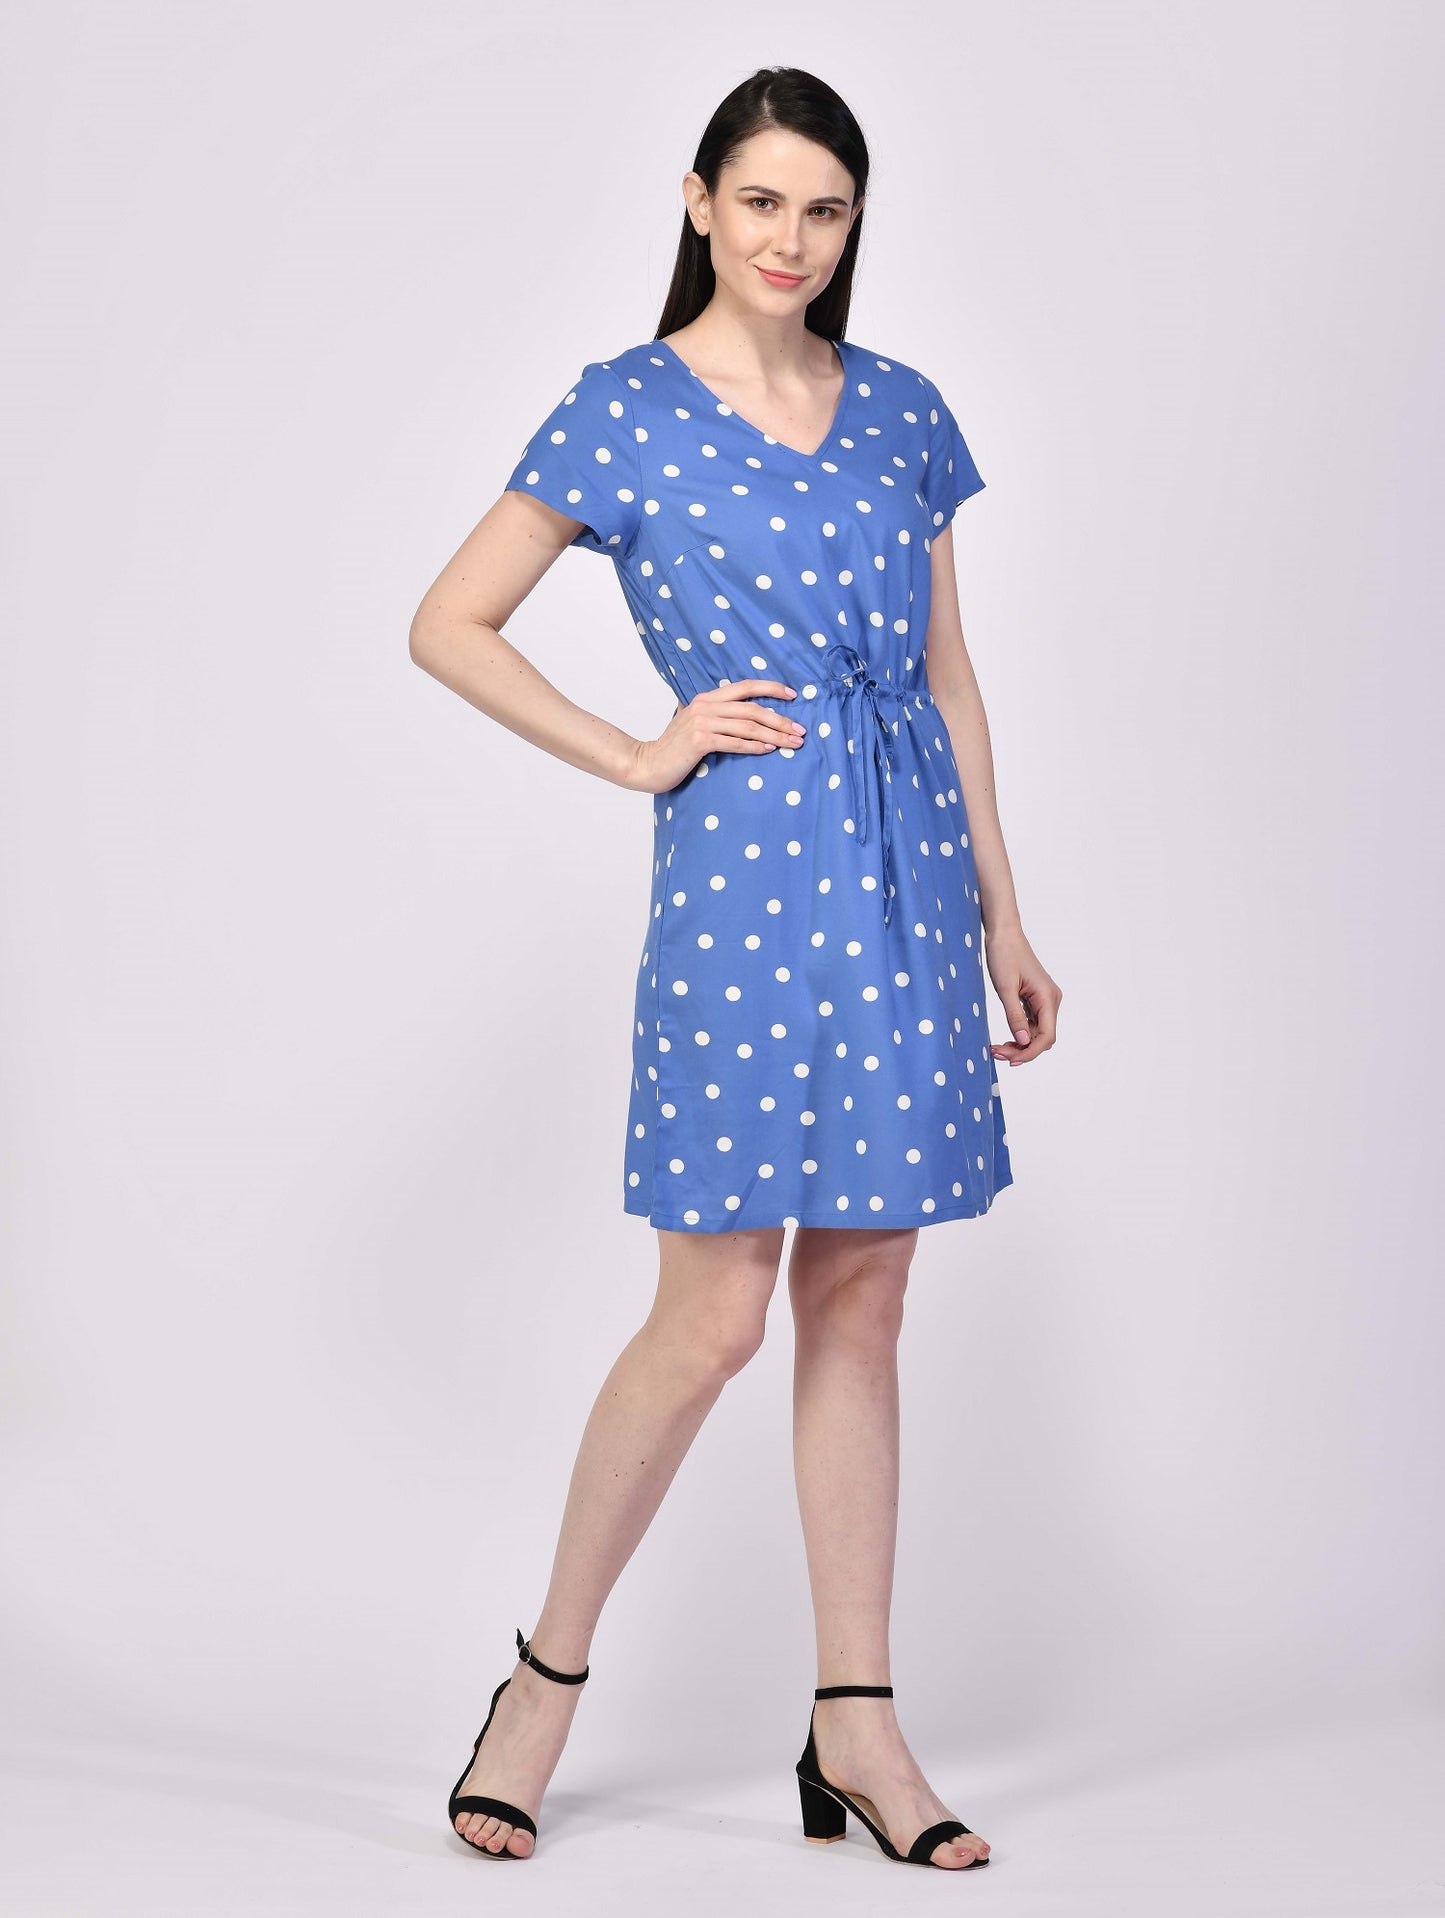 NUEVOSDAMAS Women Rayon Polka Dot Printed Midi Dress